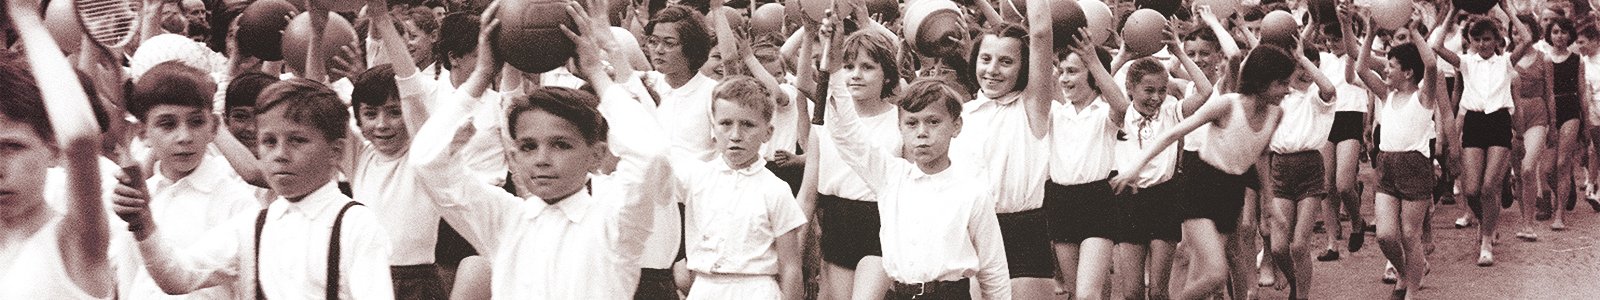 1961 Youth Day in Maribor - Wikimedia Commons/Dragiša Modrinjak